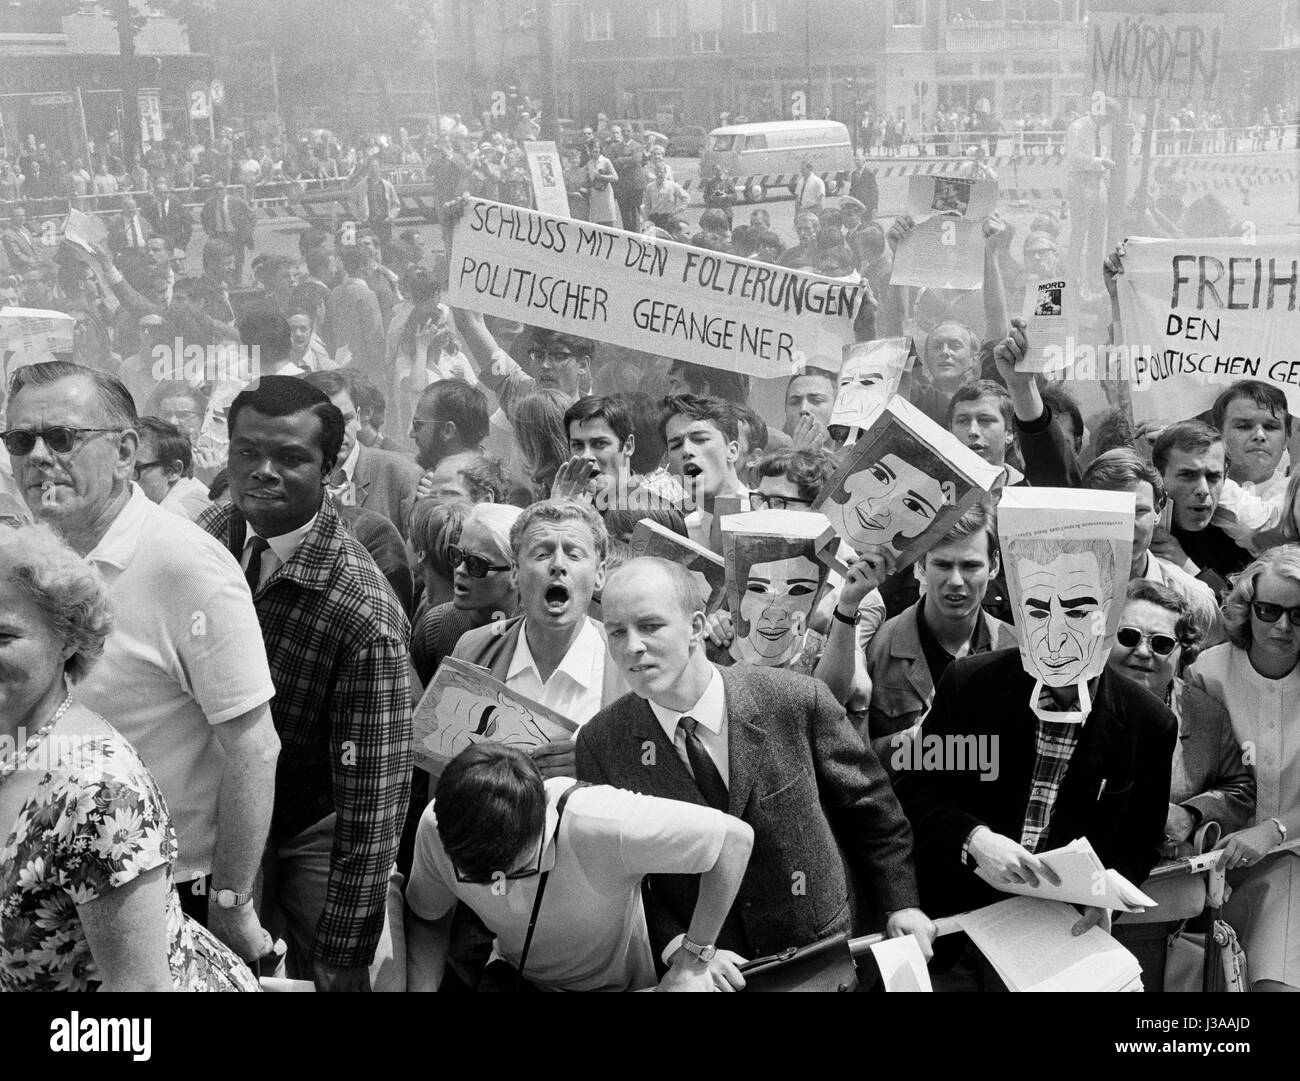 Demonstration in front of the Rathaus Berlin-Schöneberg, 1967 Stock Photo